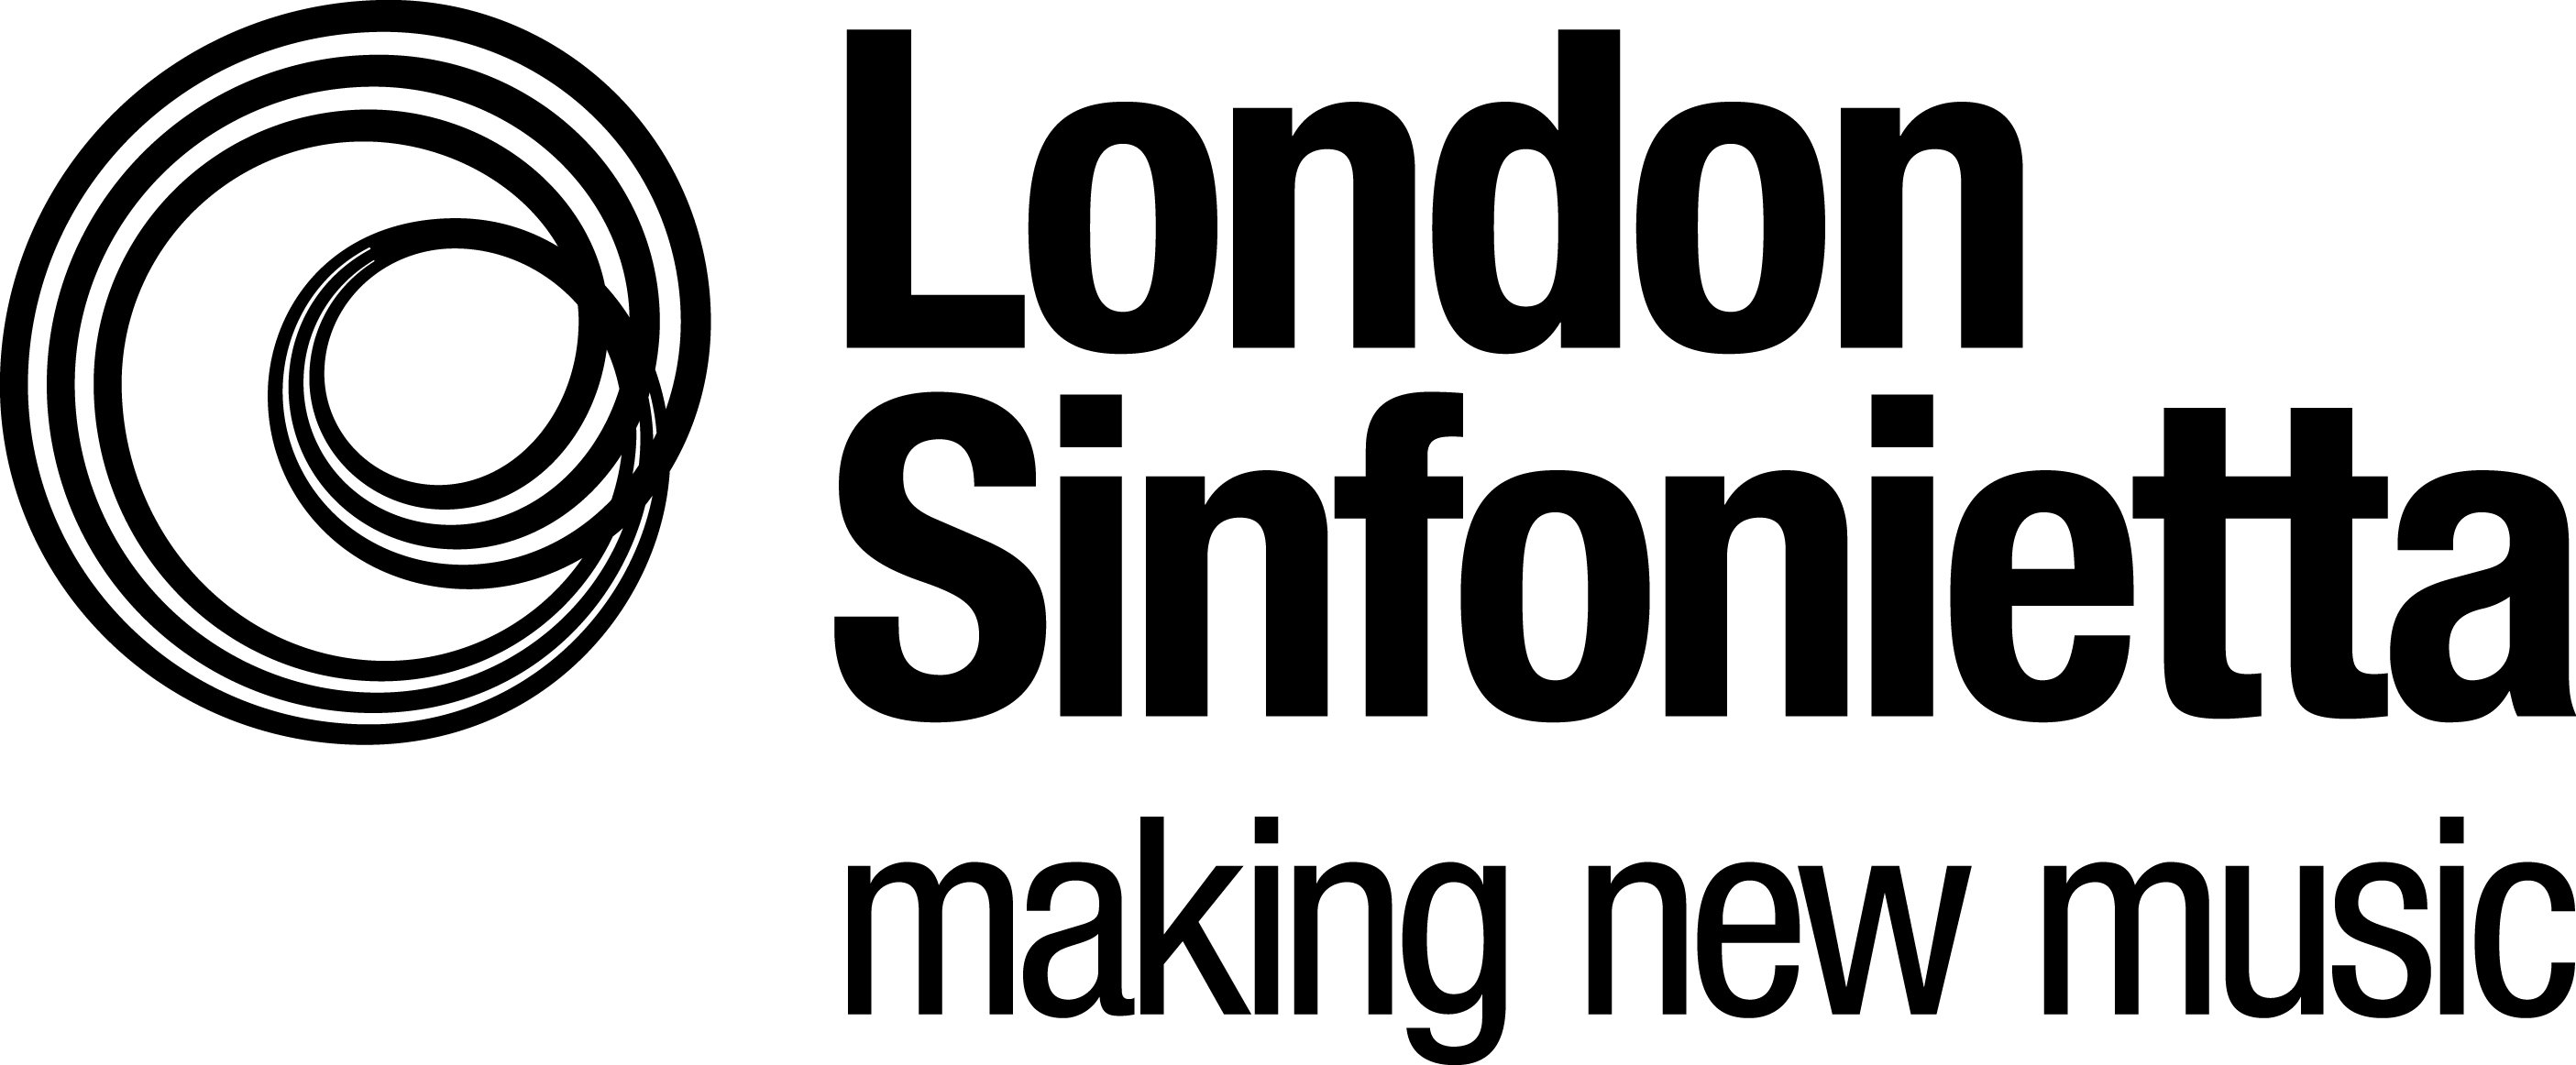 London Sinfonietta